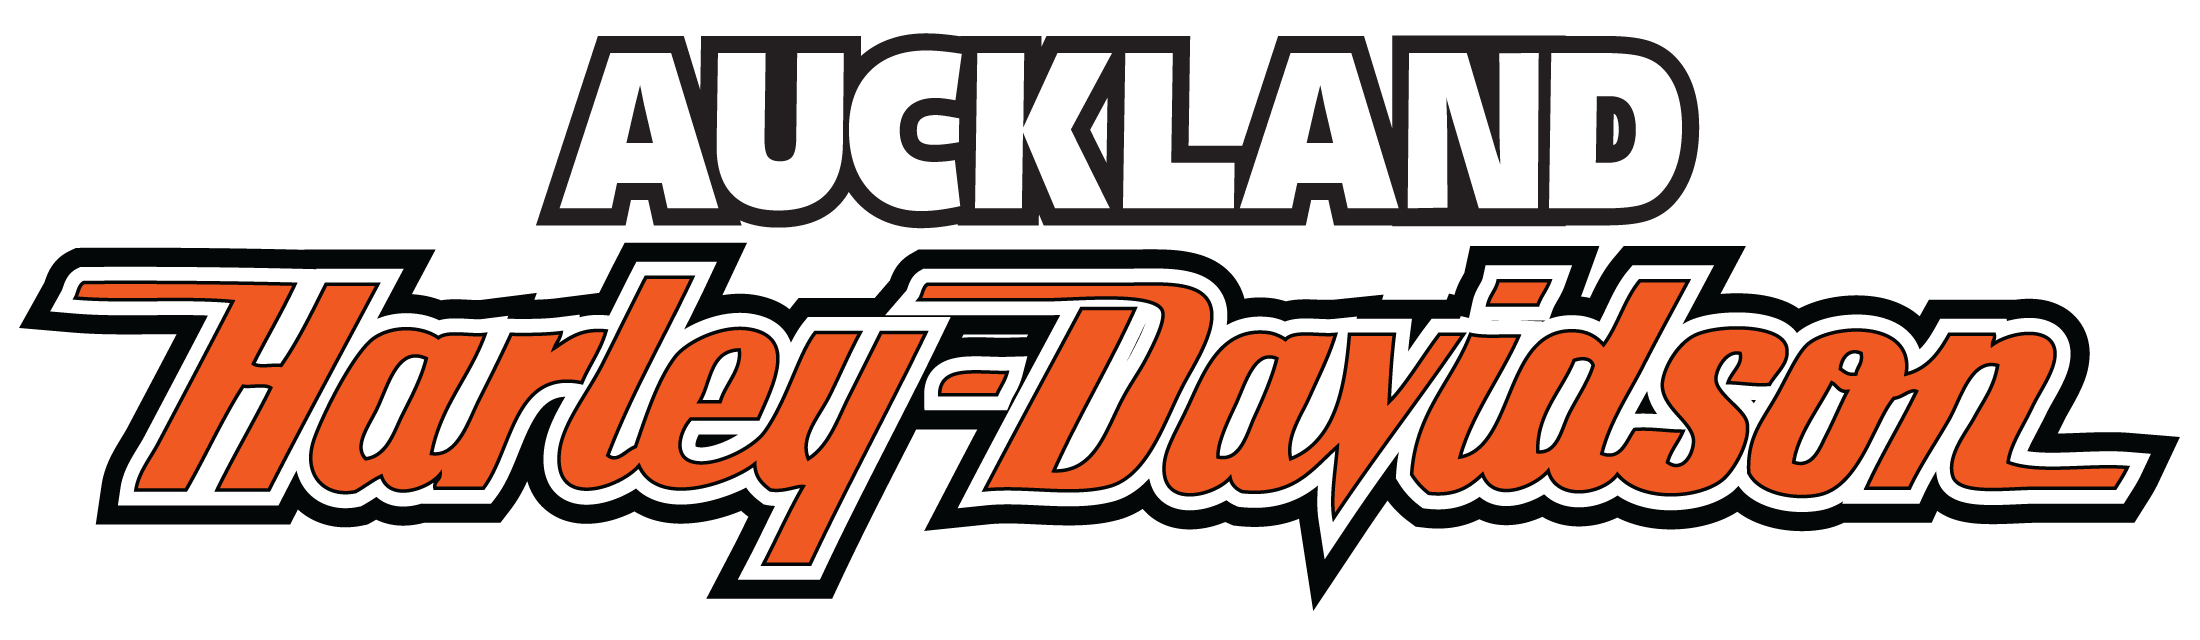 Auckland Harley Davidson